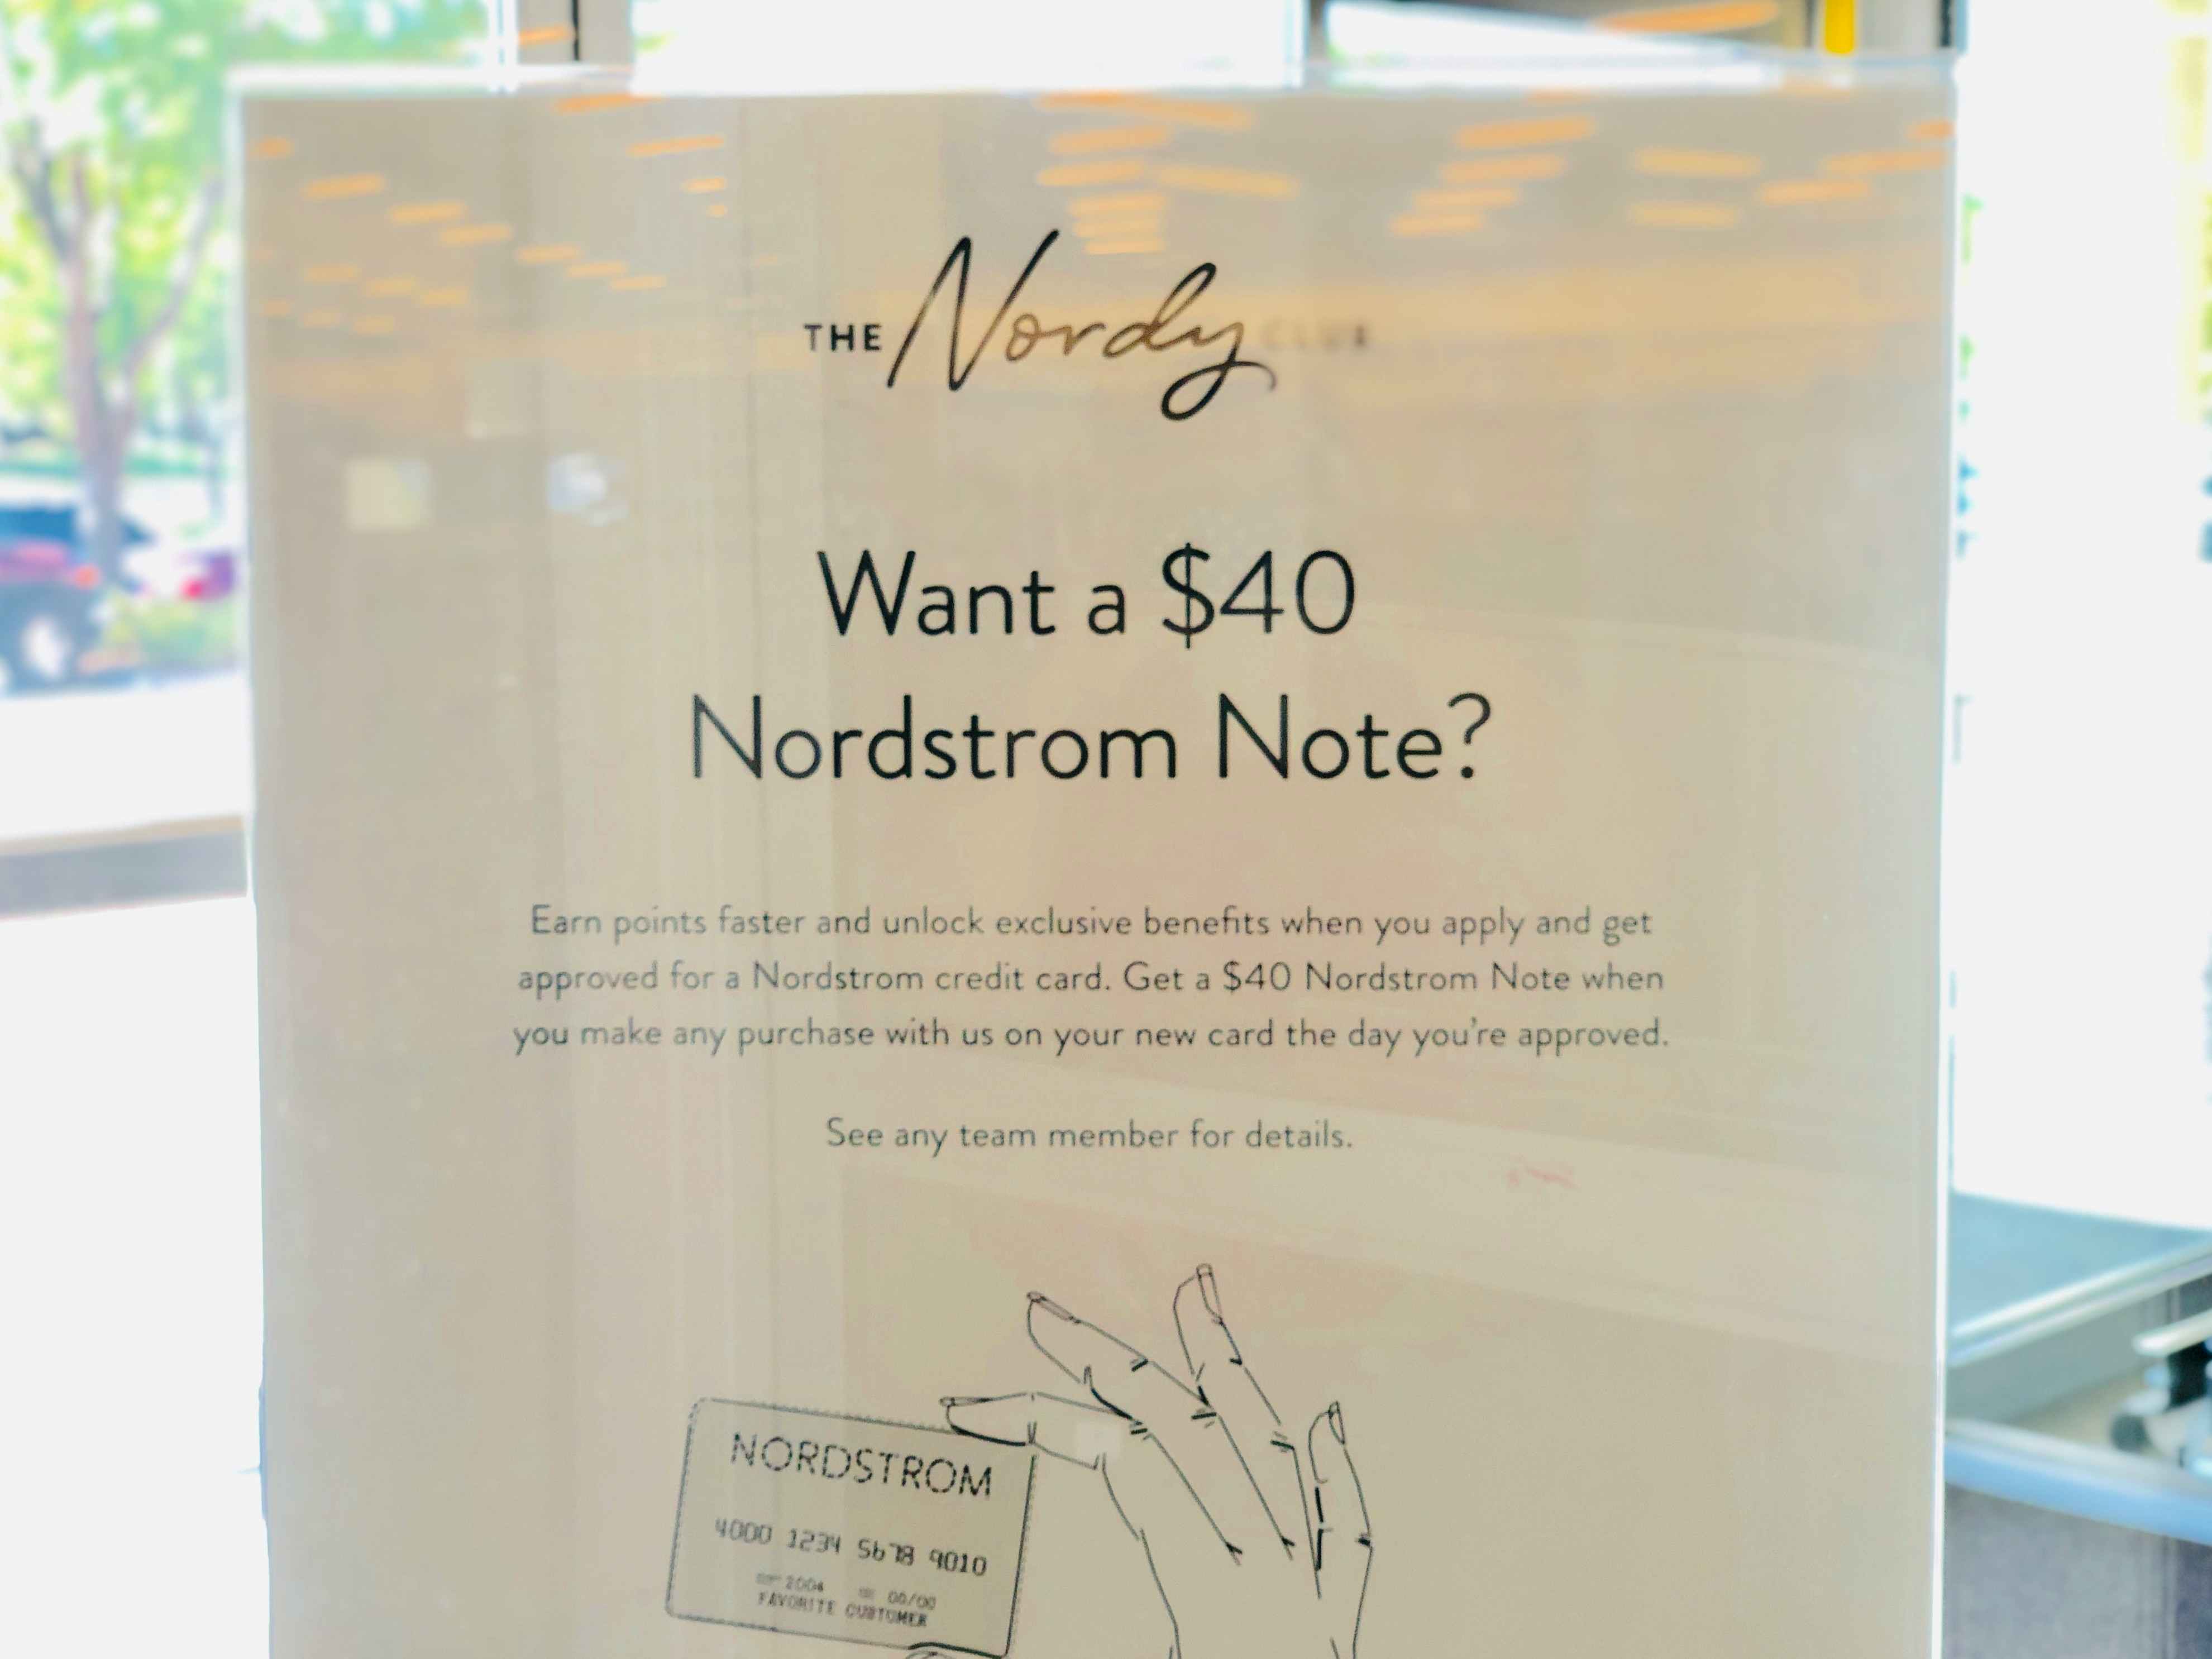 Should Nordstrom spin off Nordstrom Rack? - RetailWire